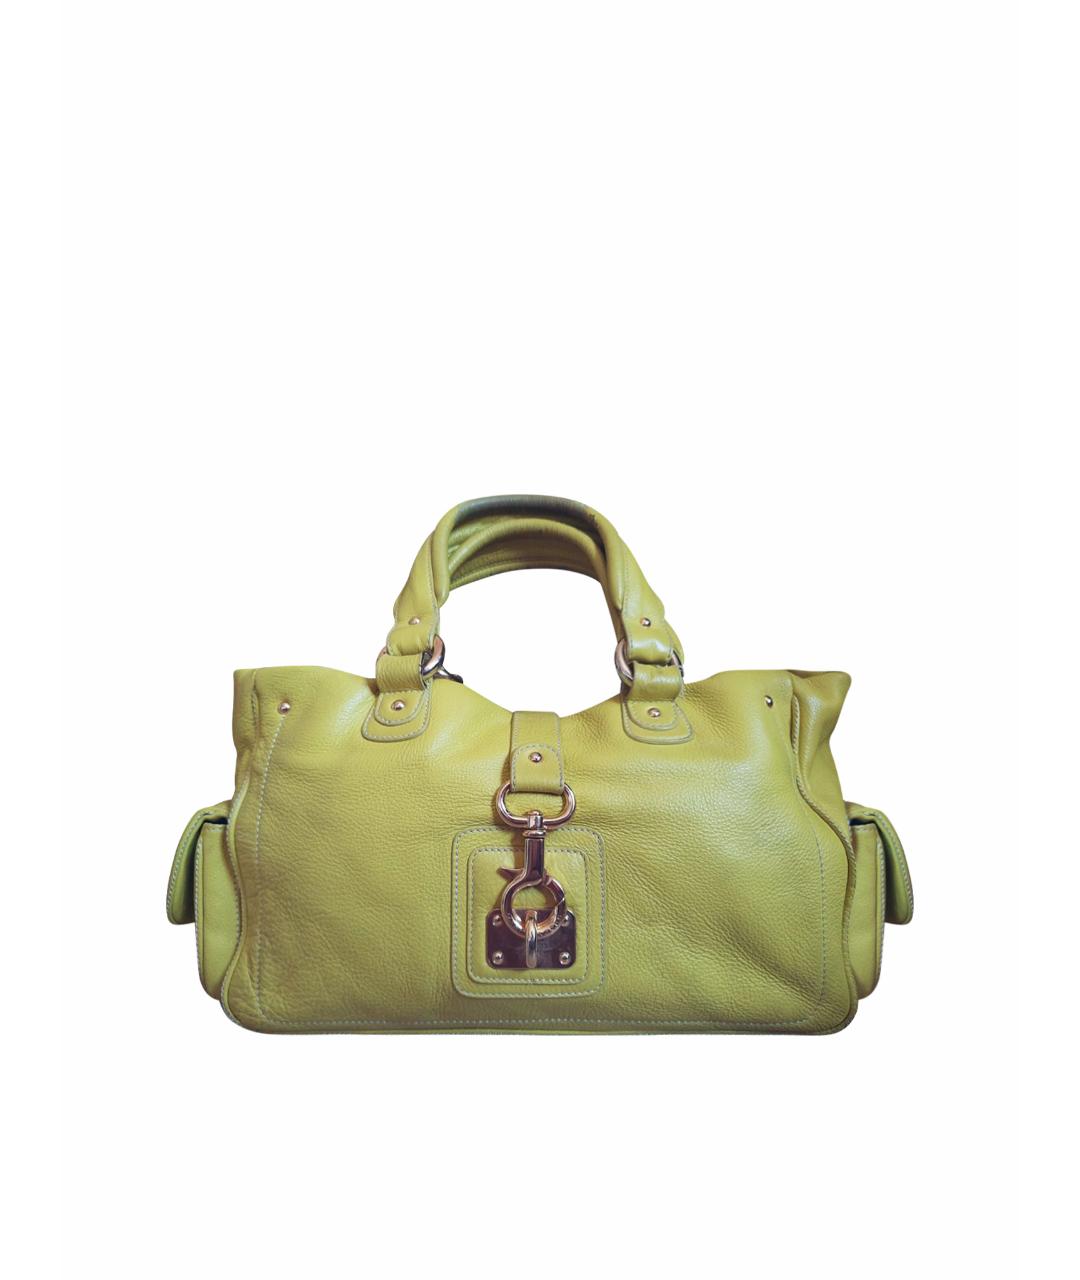 MARC BY MARC JACOBS Желтая кожаная сумка с короткими ручками, фото 1